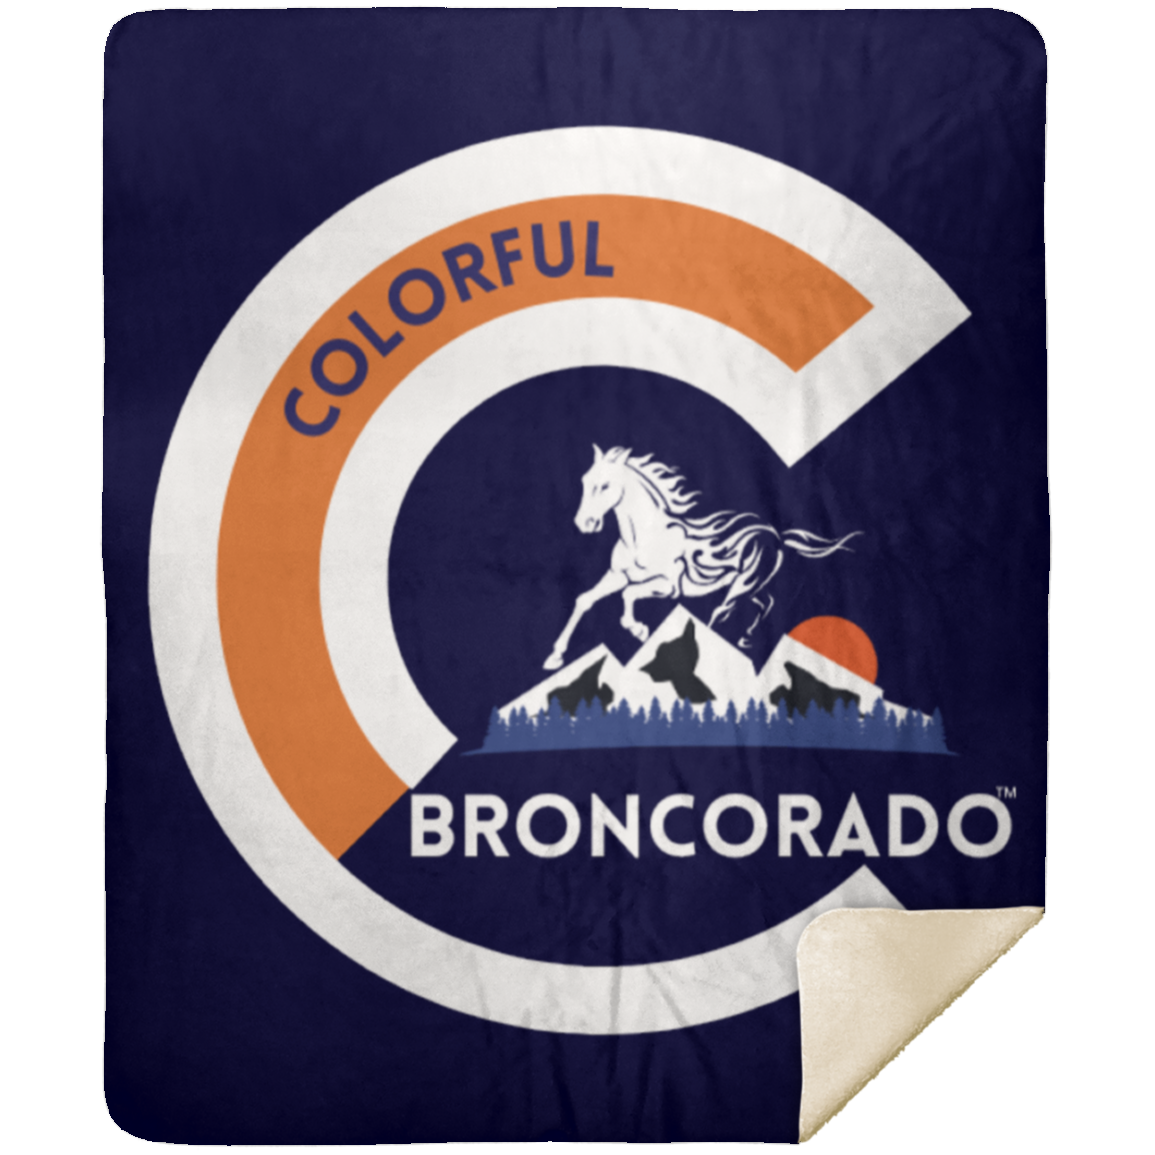 Colorful Broncorado™ Denver Bronco Fan Gear Premium Soft Large Sherpa Blanket 50x60